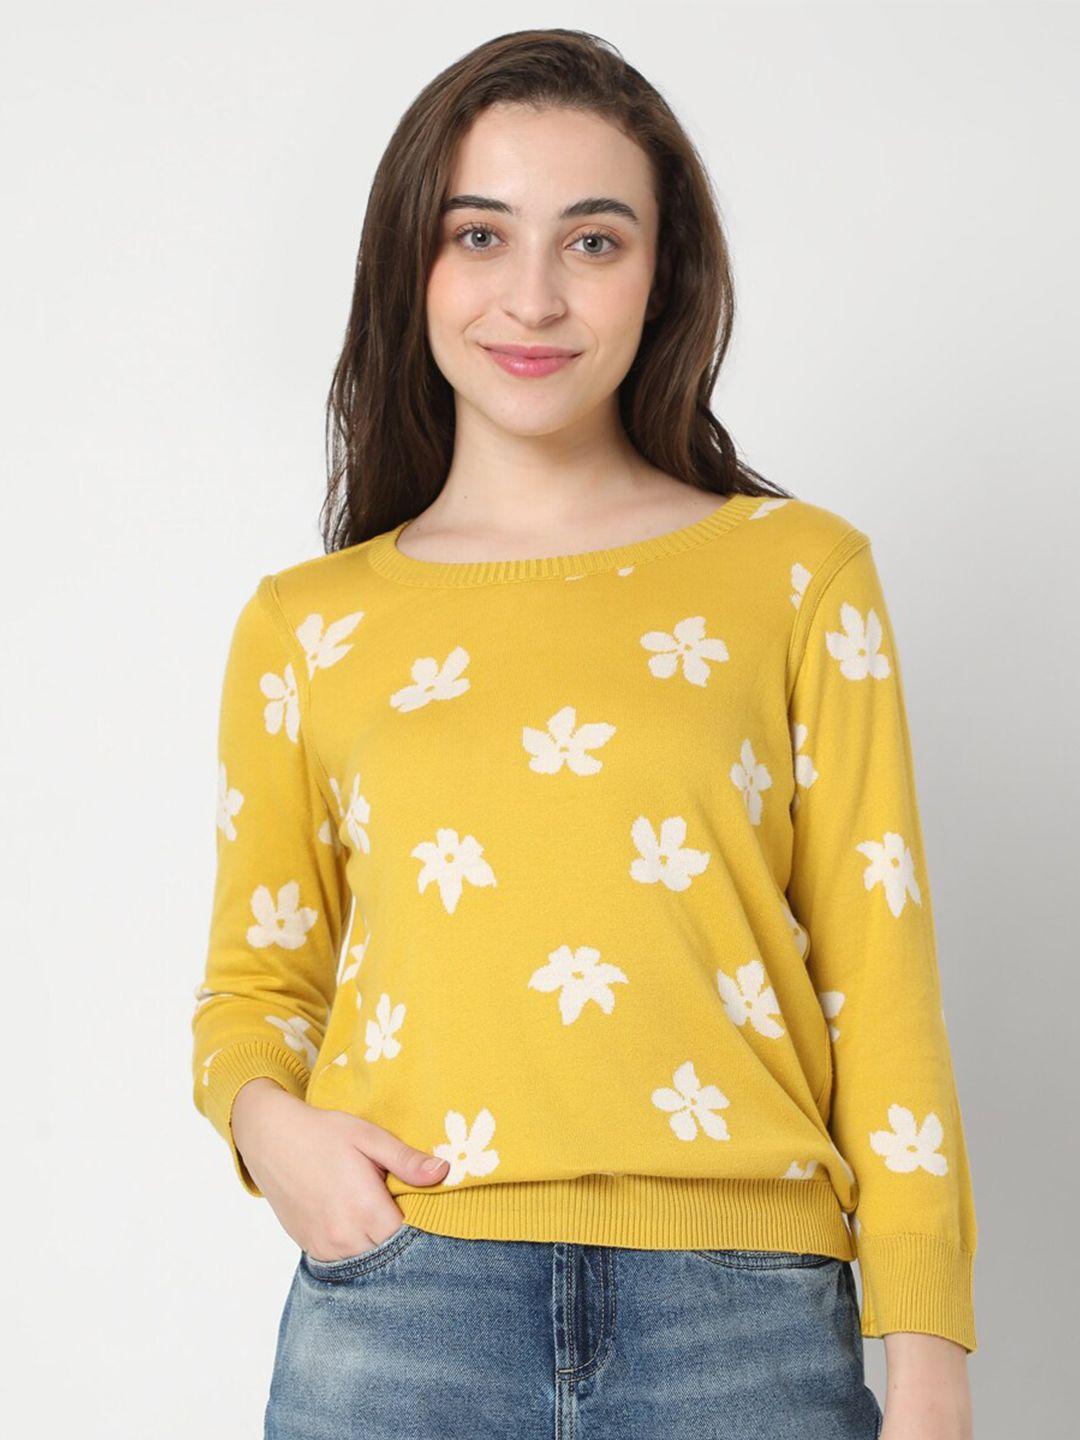 Vero Moda Women Yellow & White Floral Printed Sweater Vest